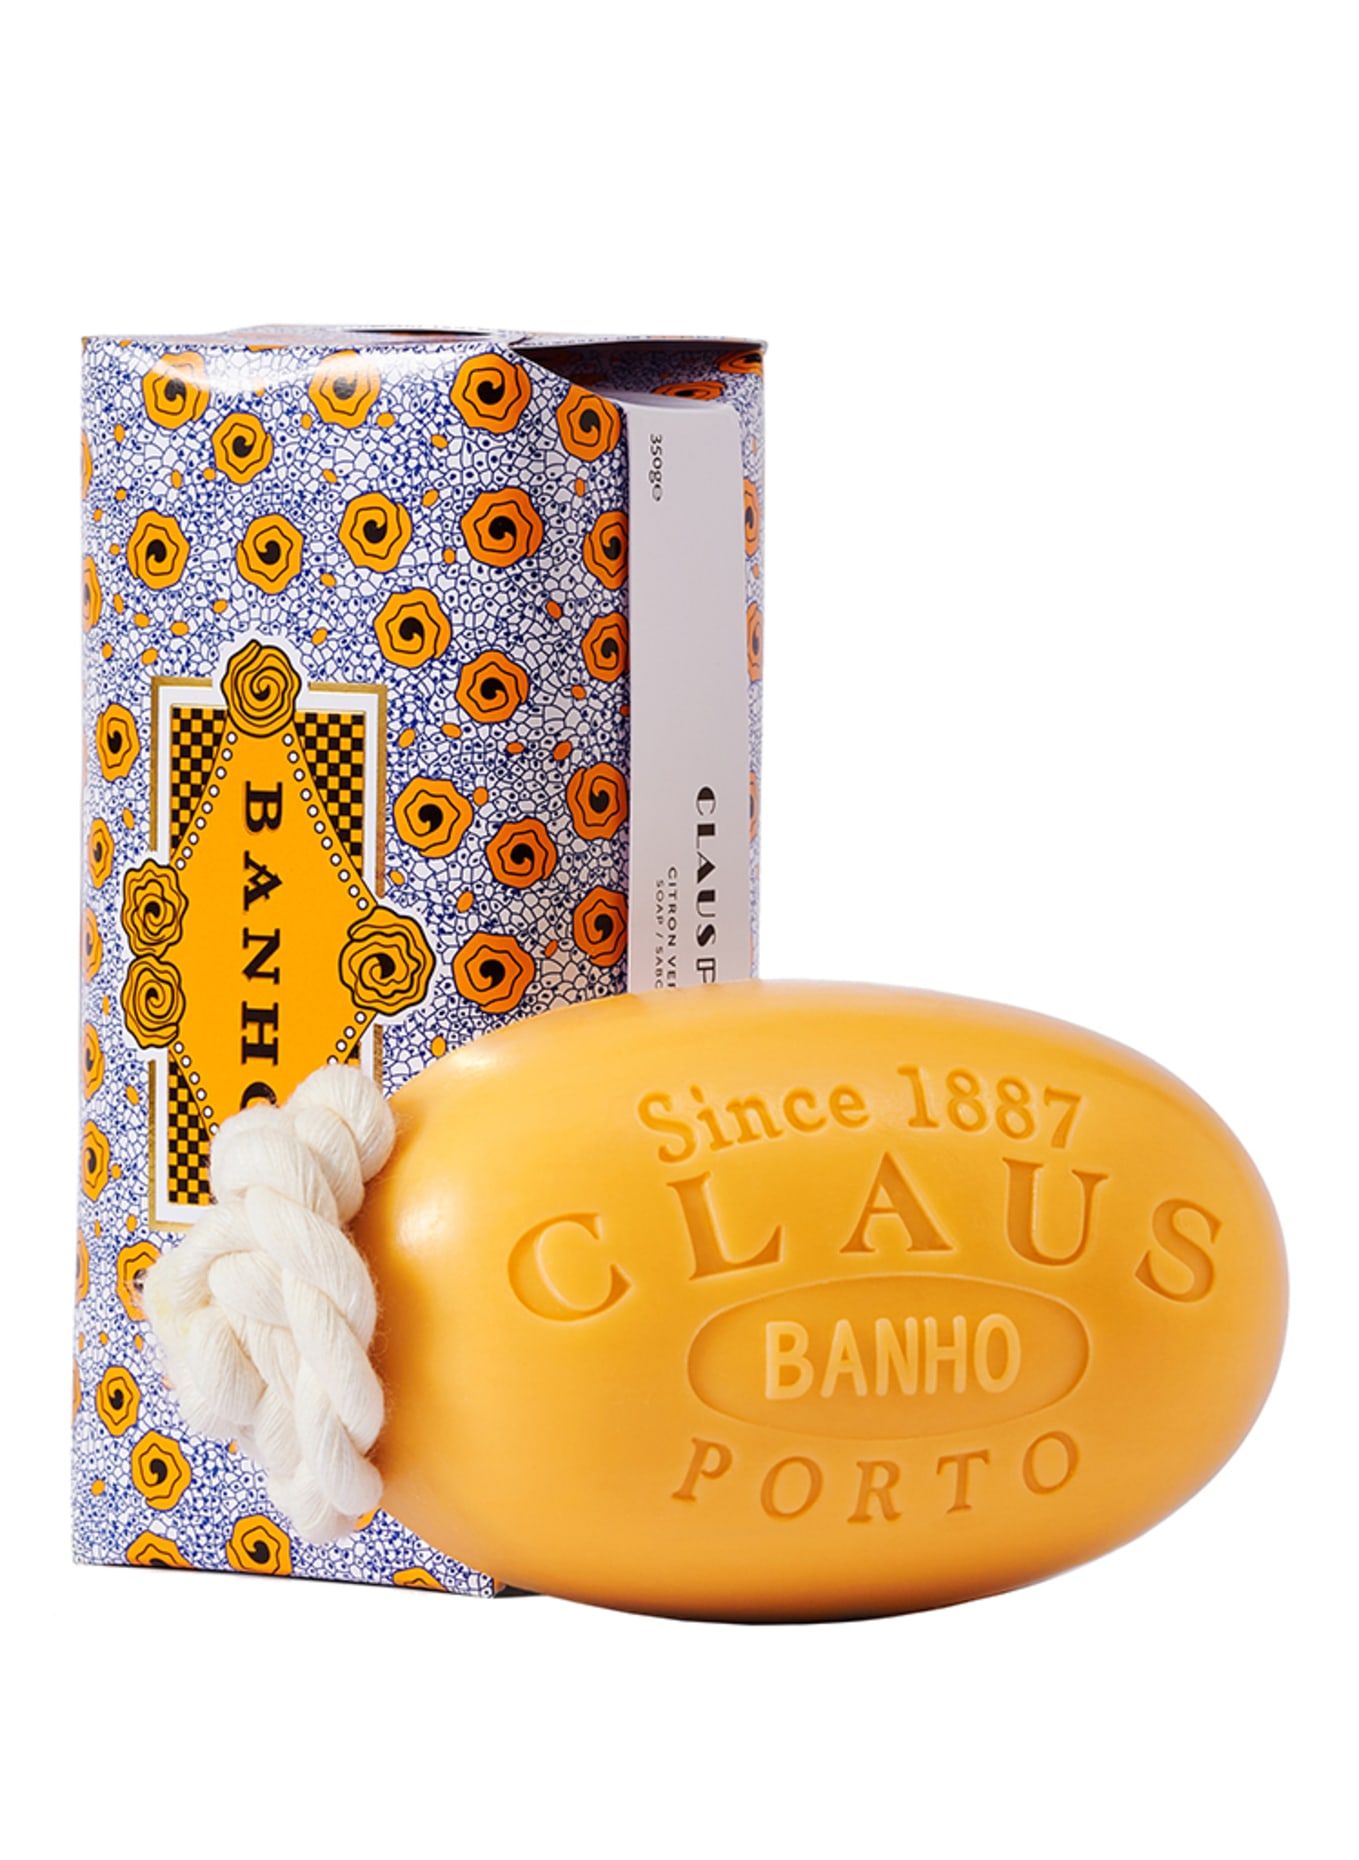 CLAUS PORTO BANHO SOAP ON A ROAP (Obrazek 1)